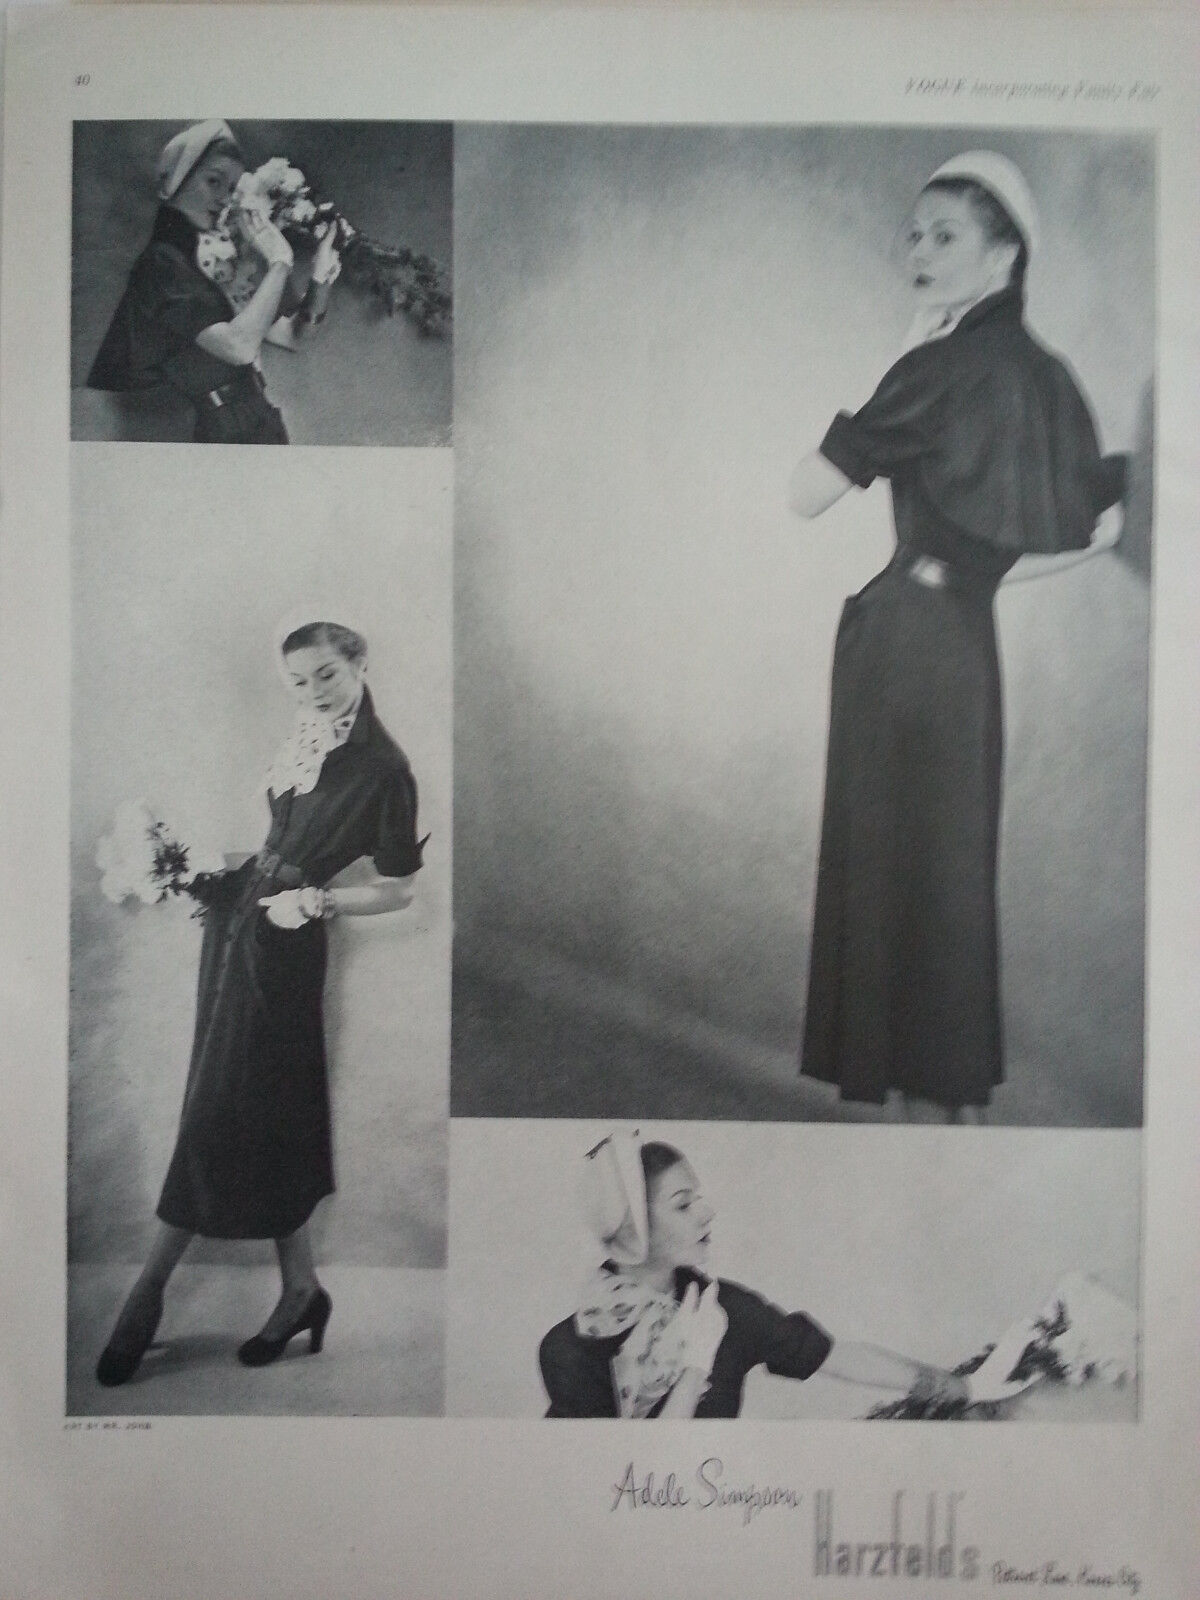 1949 Adele Simpson Womens Dress Fashion Harzfeld's Kansas City Original Ad